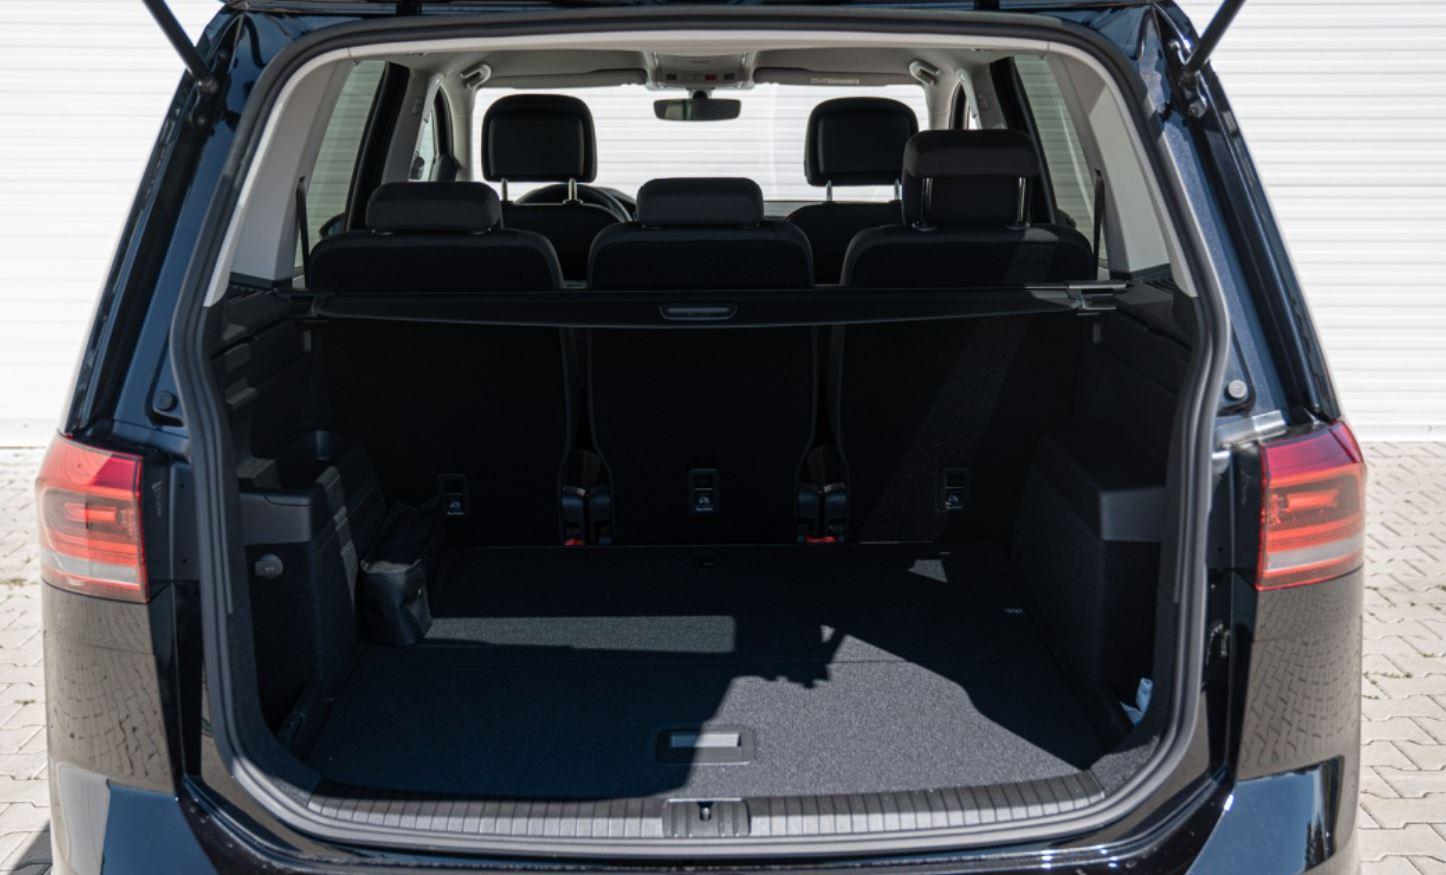 VW Touran 2.0 TDI Executive 7 Sitze 150 PS Euro 6 - Autoservice Meran